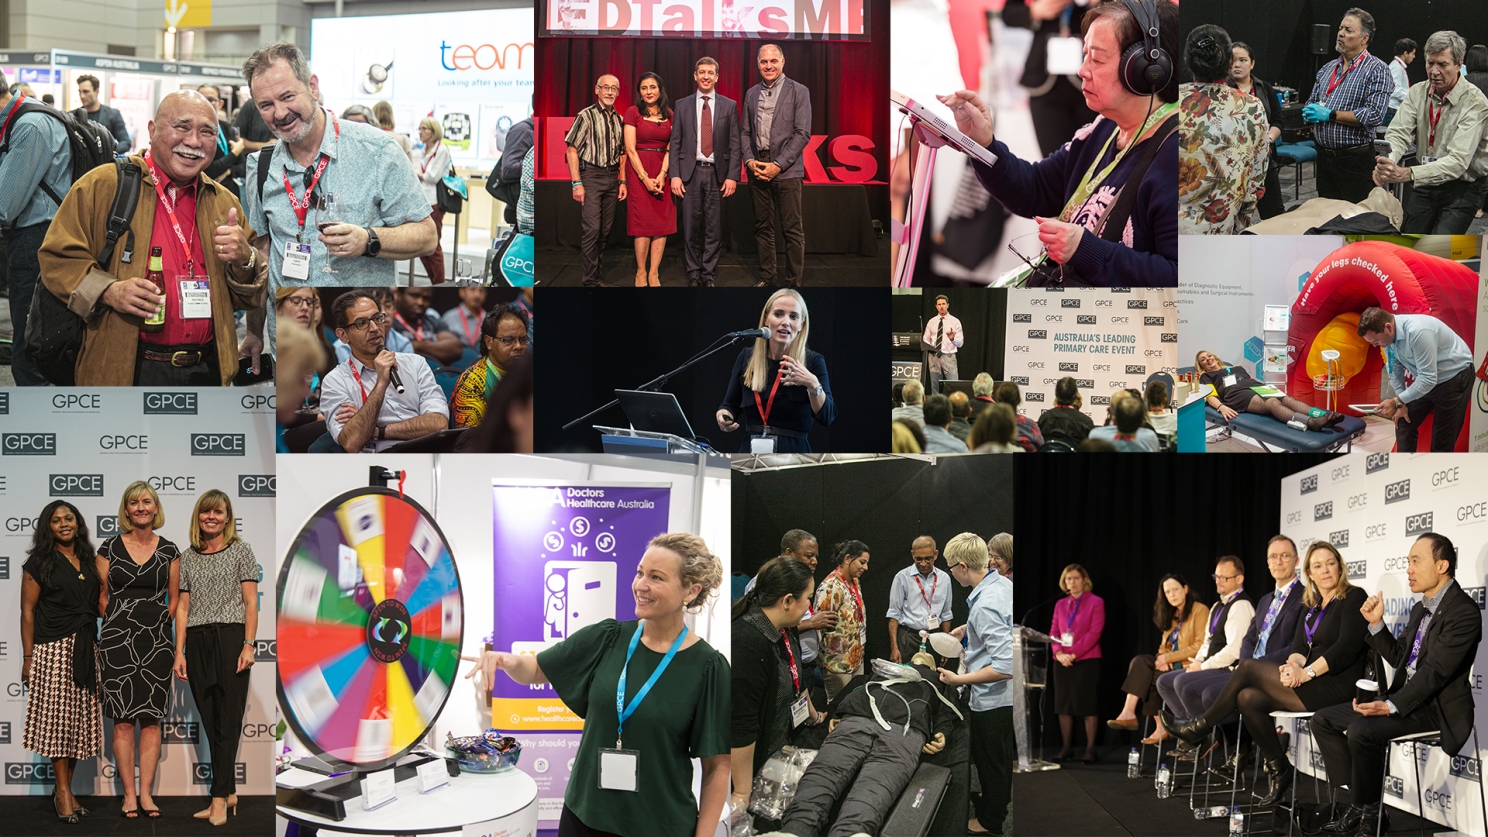 2021 General Practice Conference & Exhibition(GPCE)  Brisbane